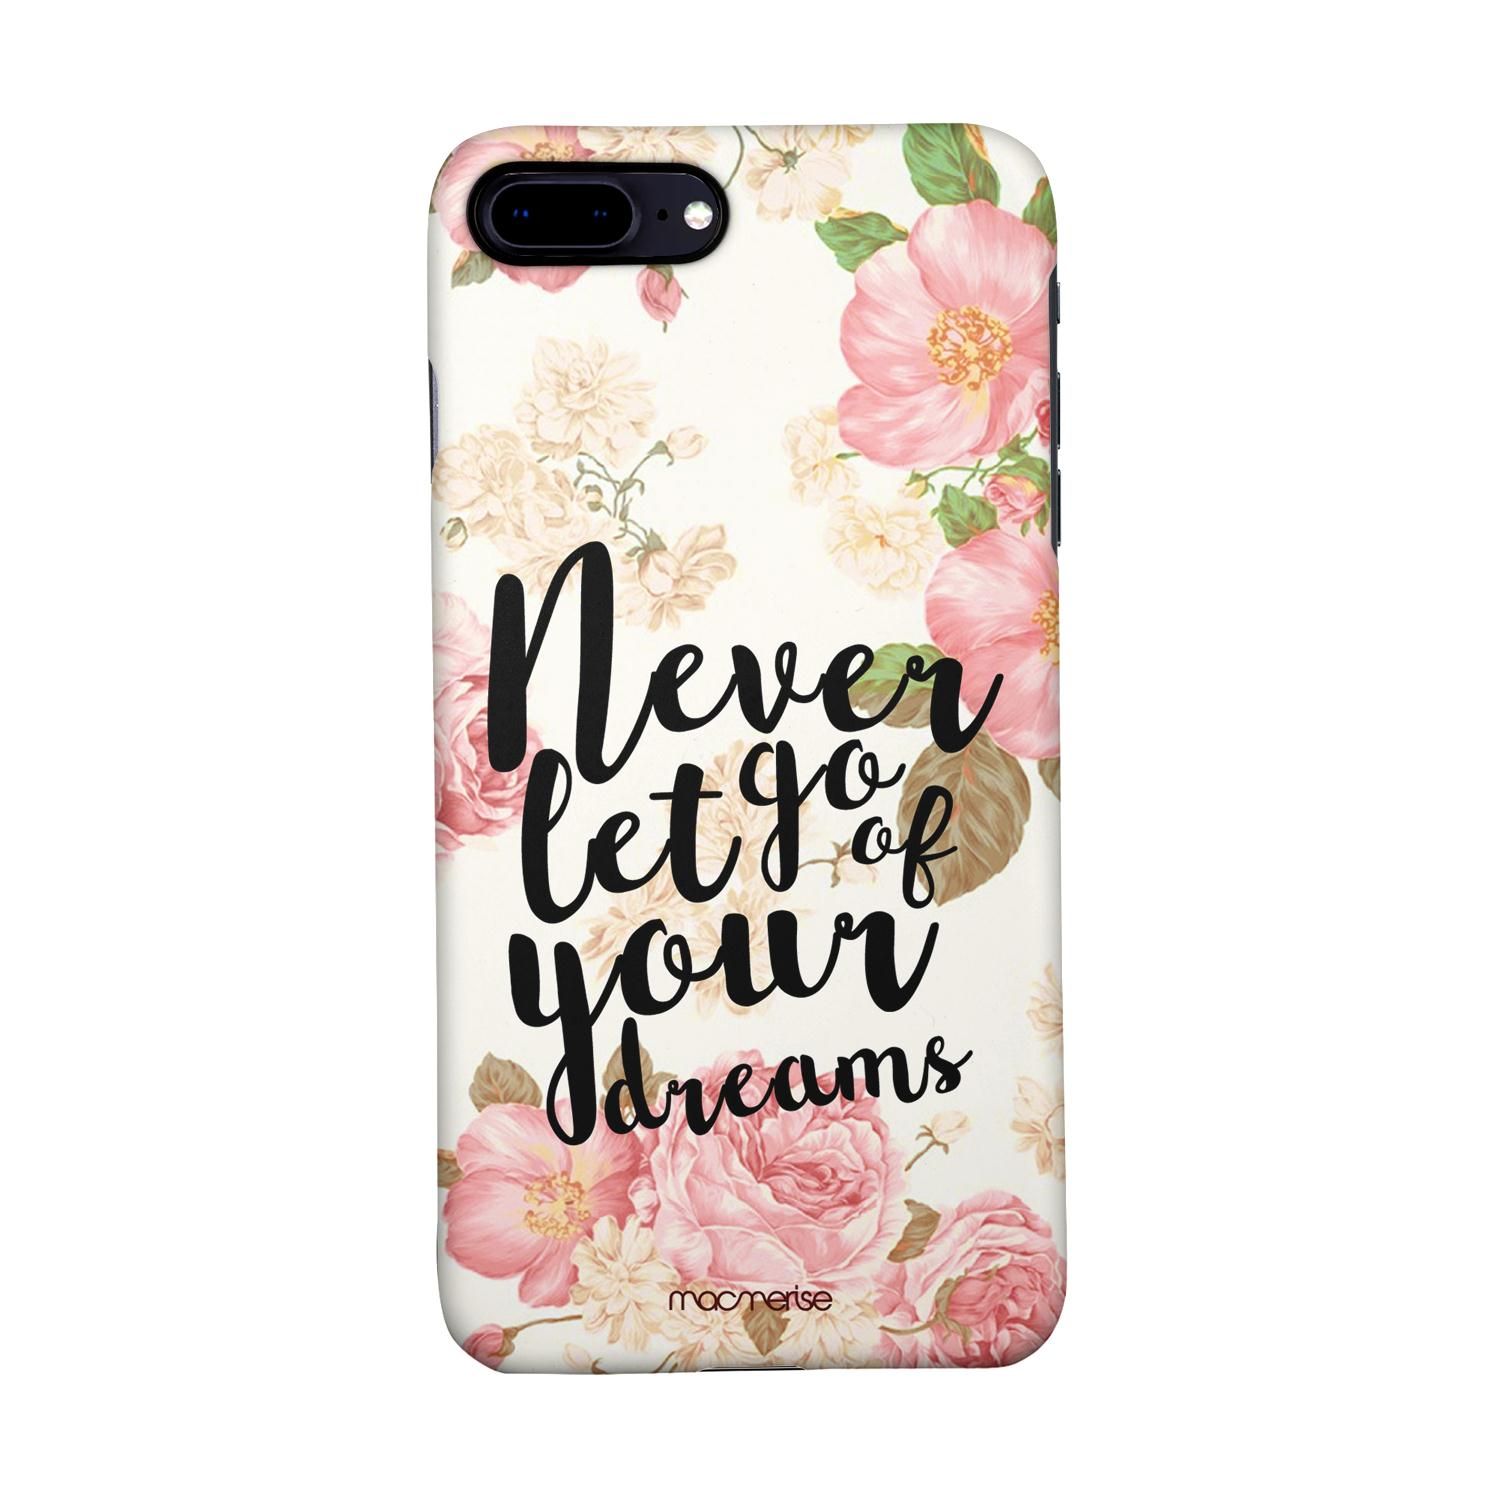 Buy Your Dreams - Sleek Phone Case for iPhone 8 Plus Online